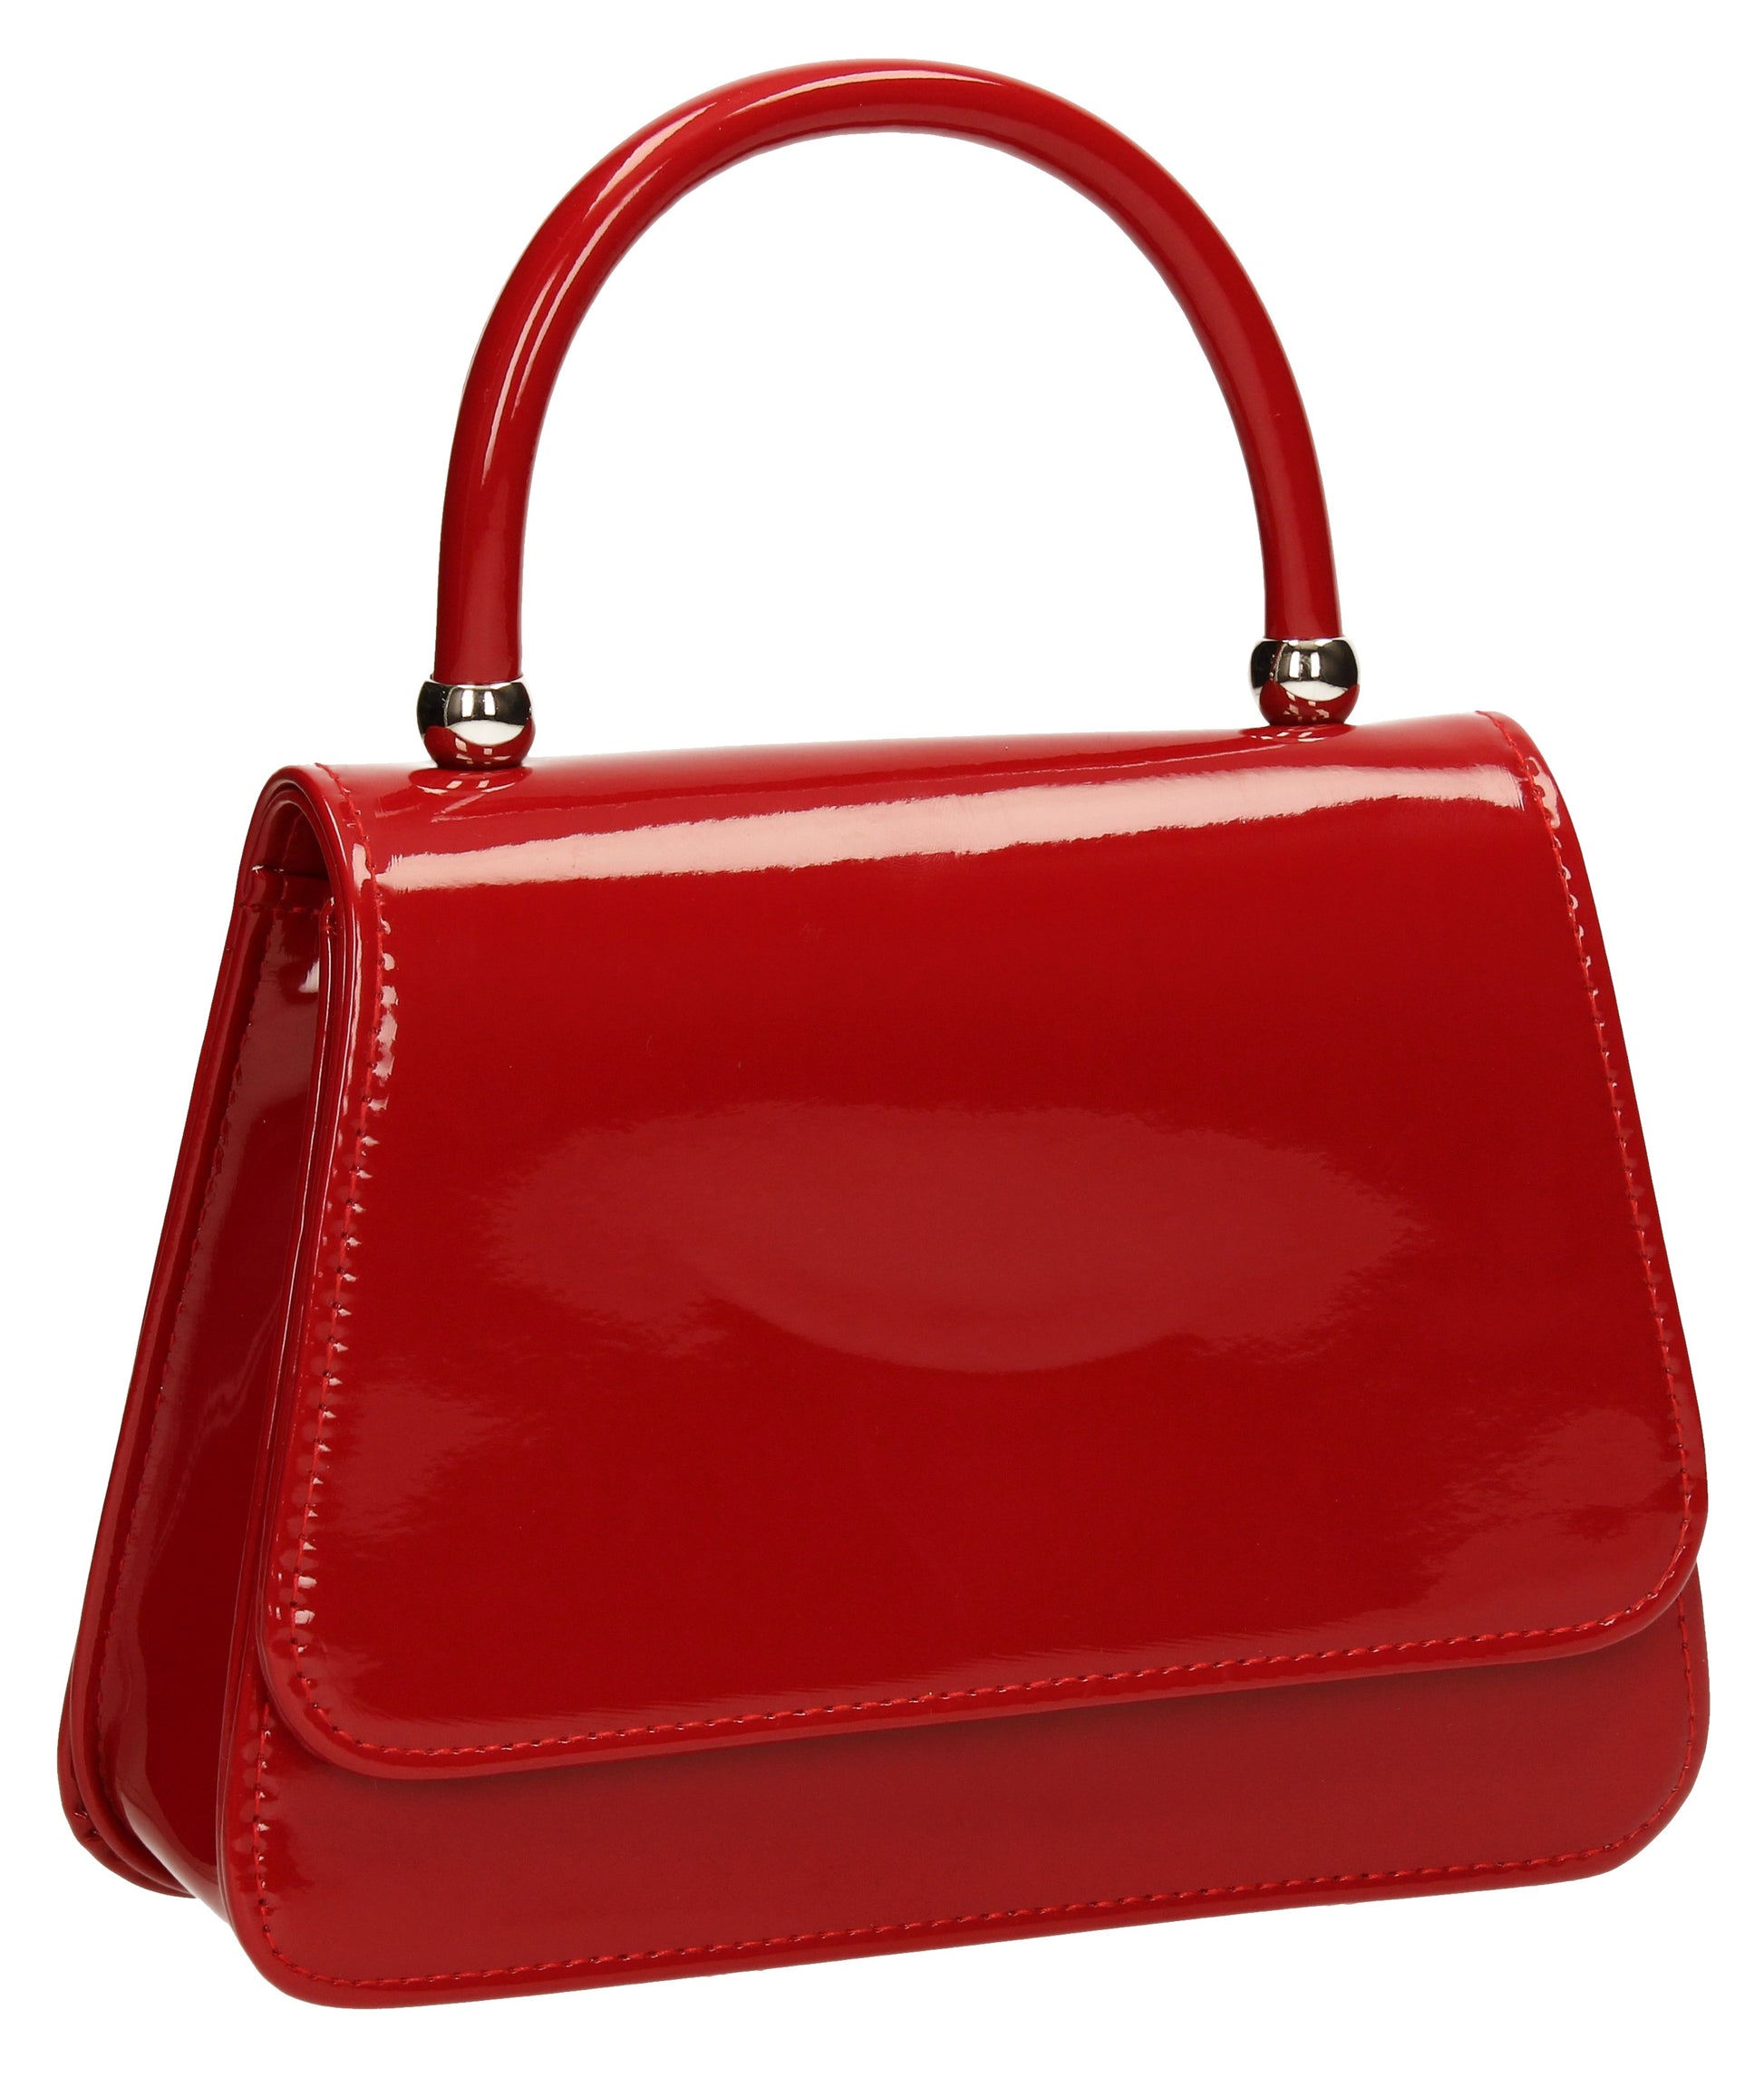 SWANKYSWANS Hayley Clutch Bag Red Cute Cheap Clutch Bag For Weddings School and Work